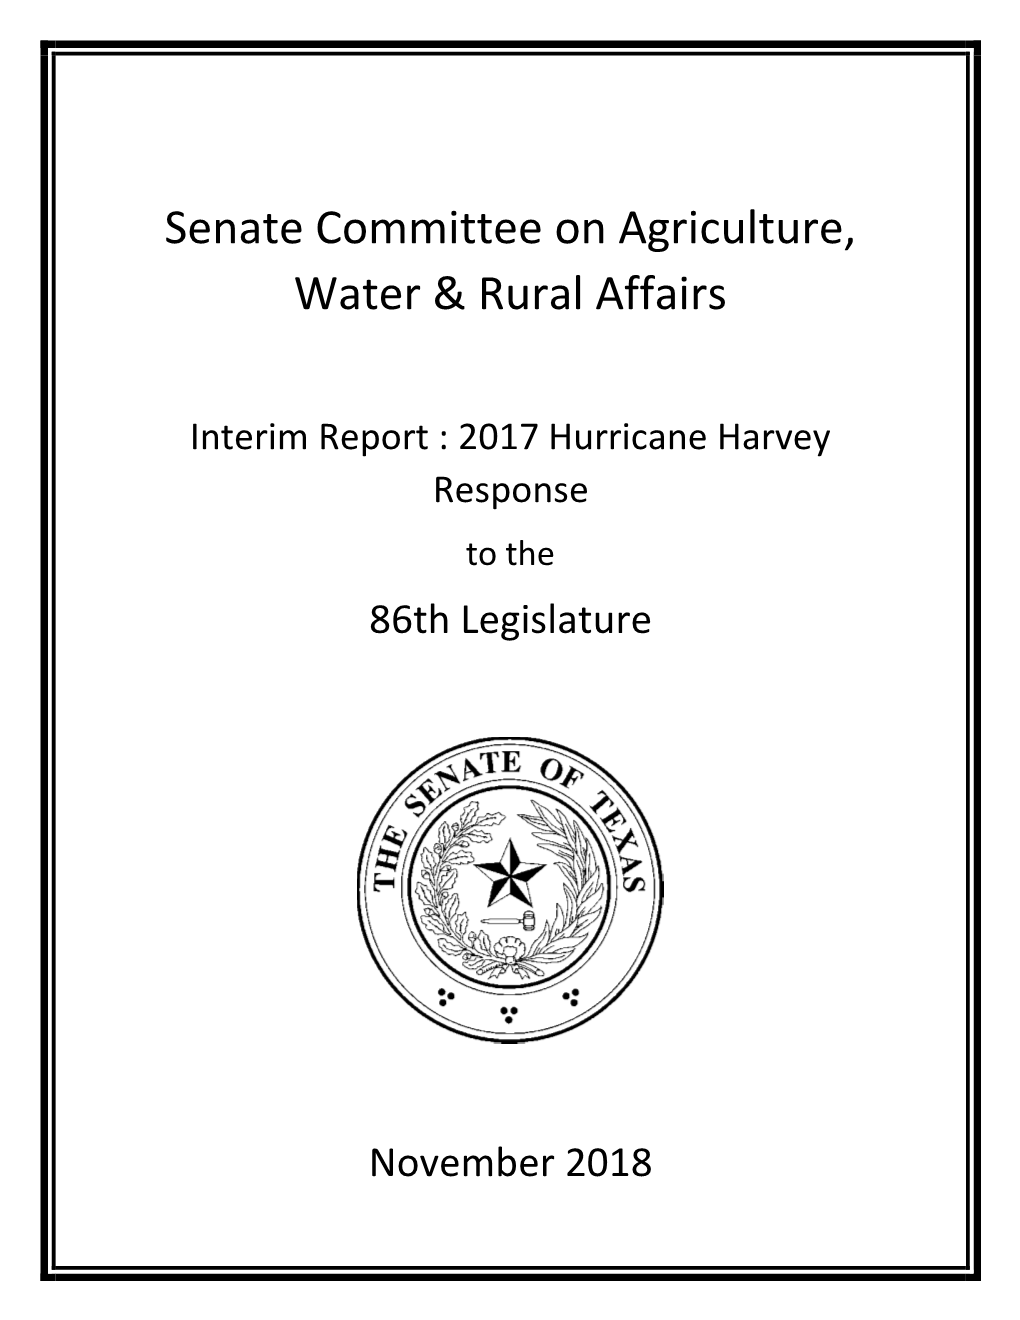 Interim Report : 2017 Hurricane Harvey Response to the 86Th Legislature